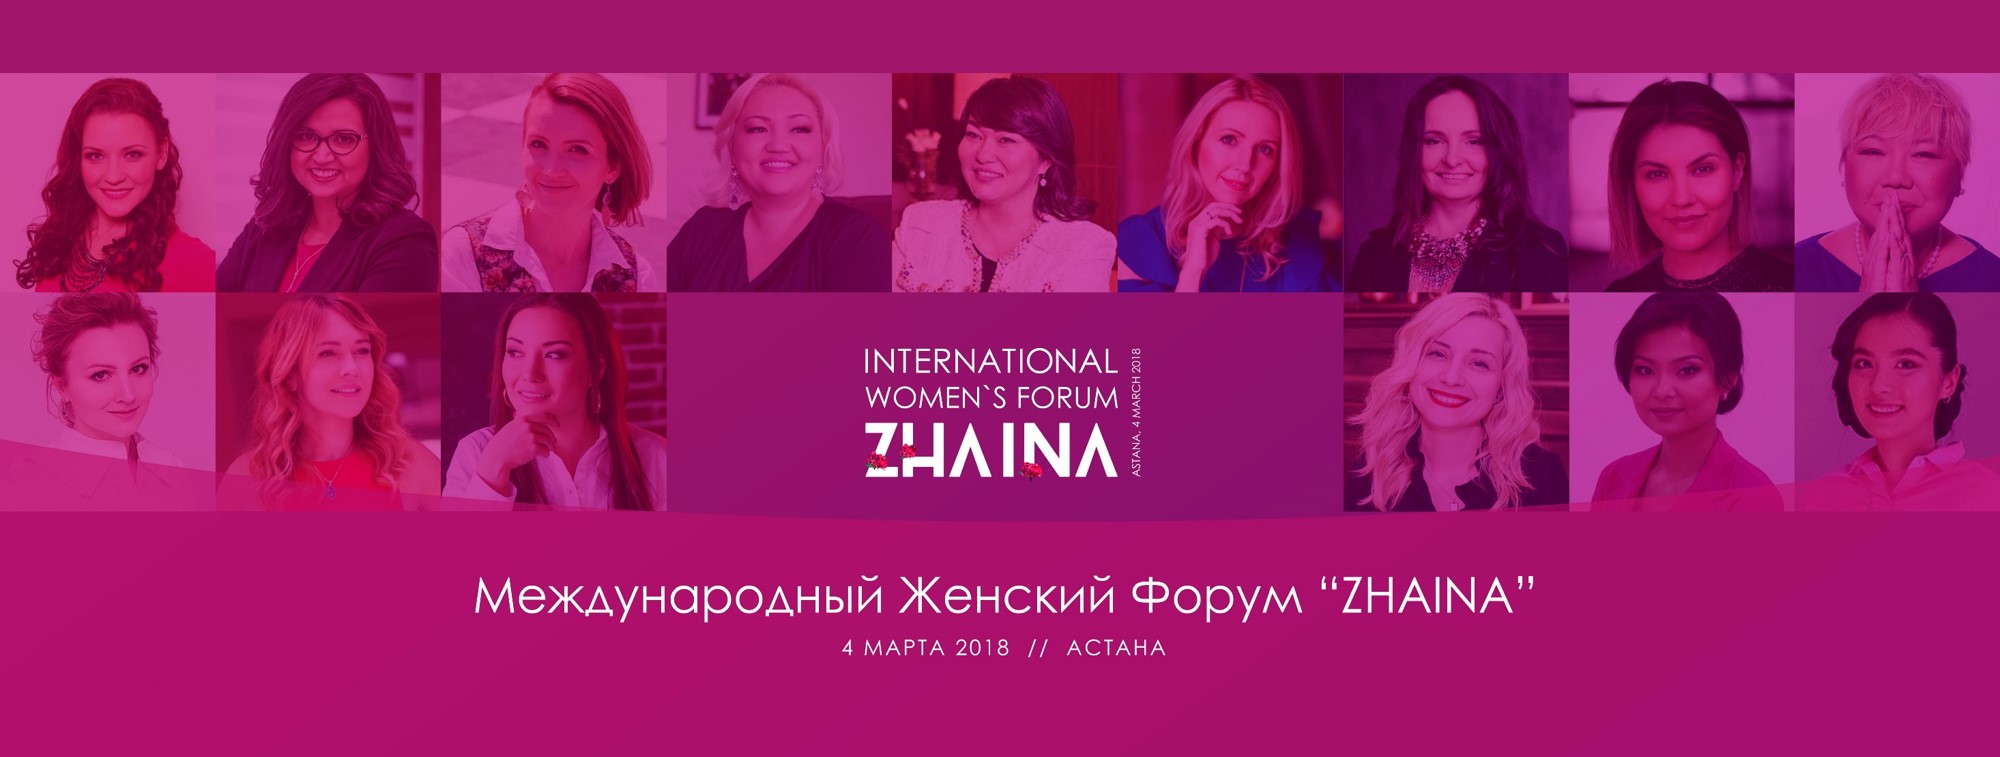 Международный женский бизнес-форум Zhaina